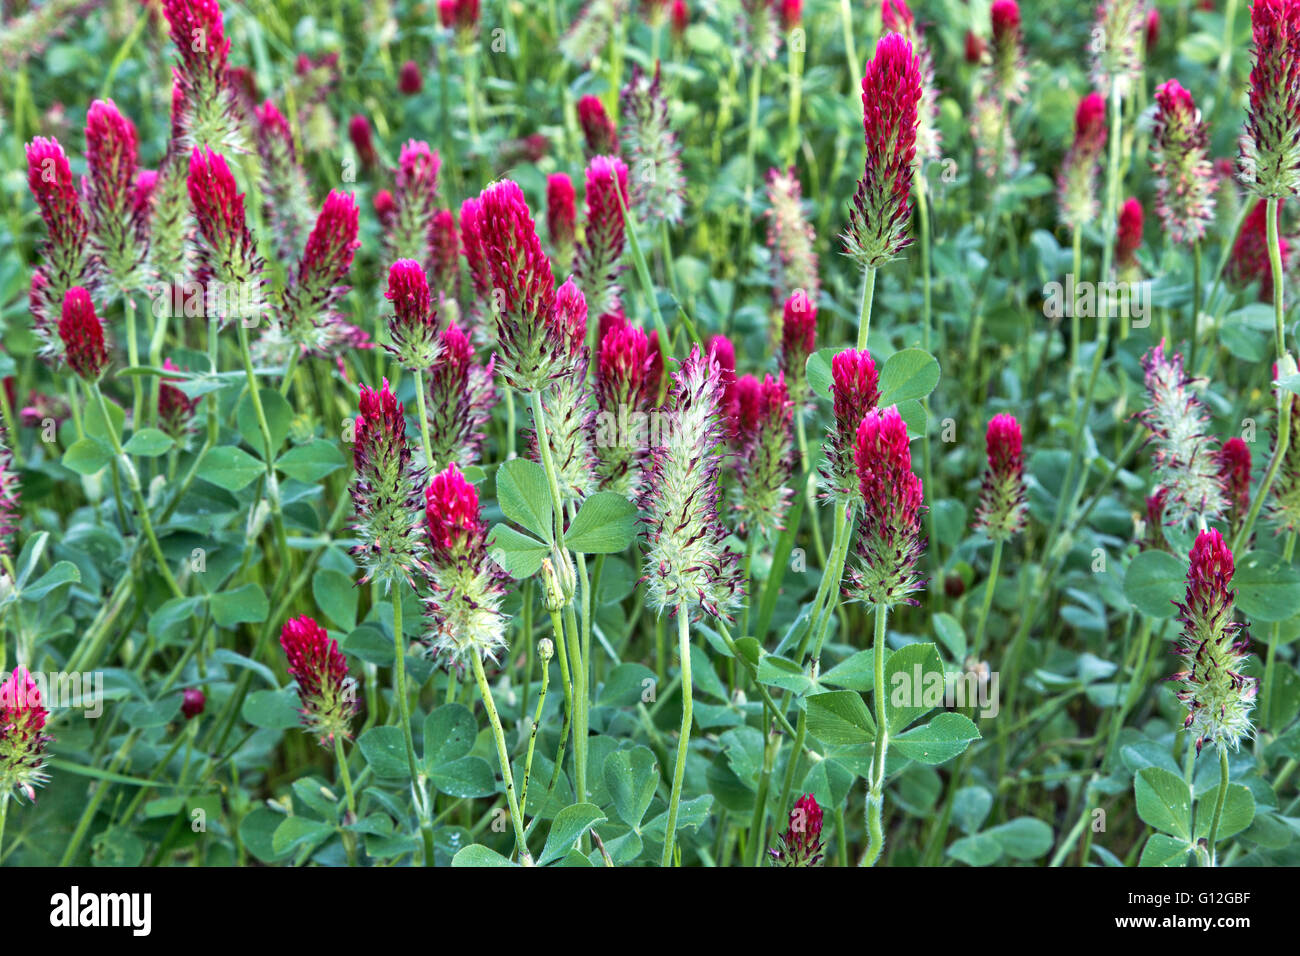 Crimson Clover 'Trifolium incarnatum' flowering in green field. Stock Photo